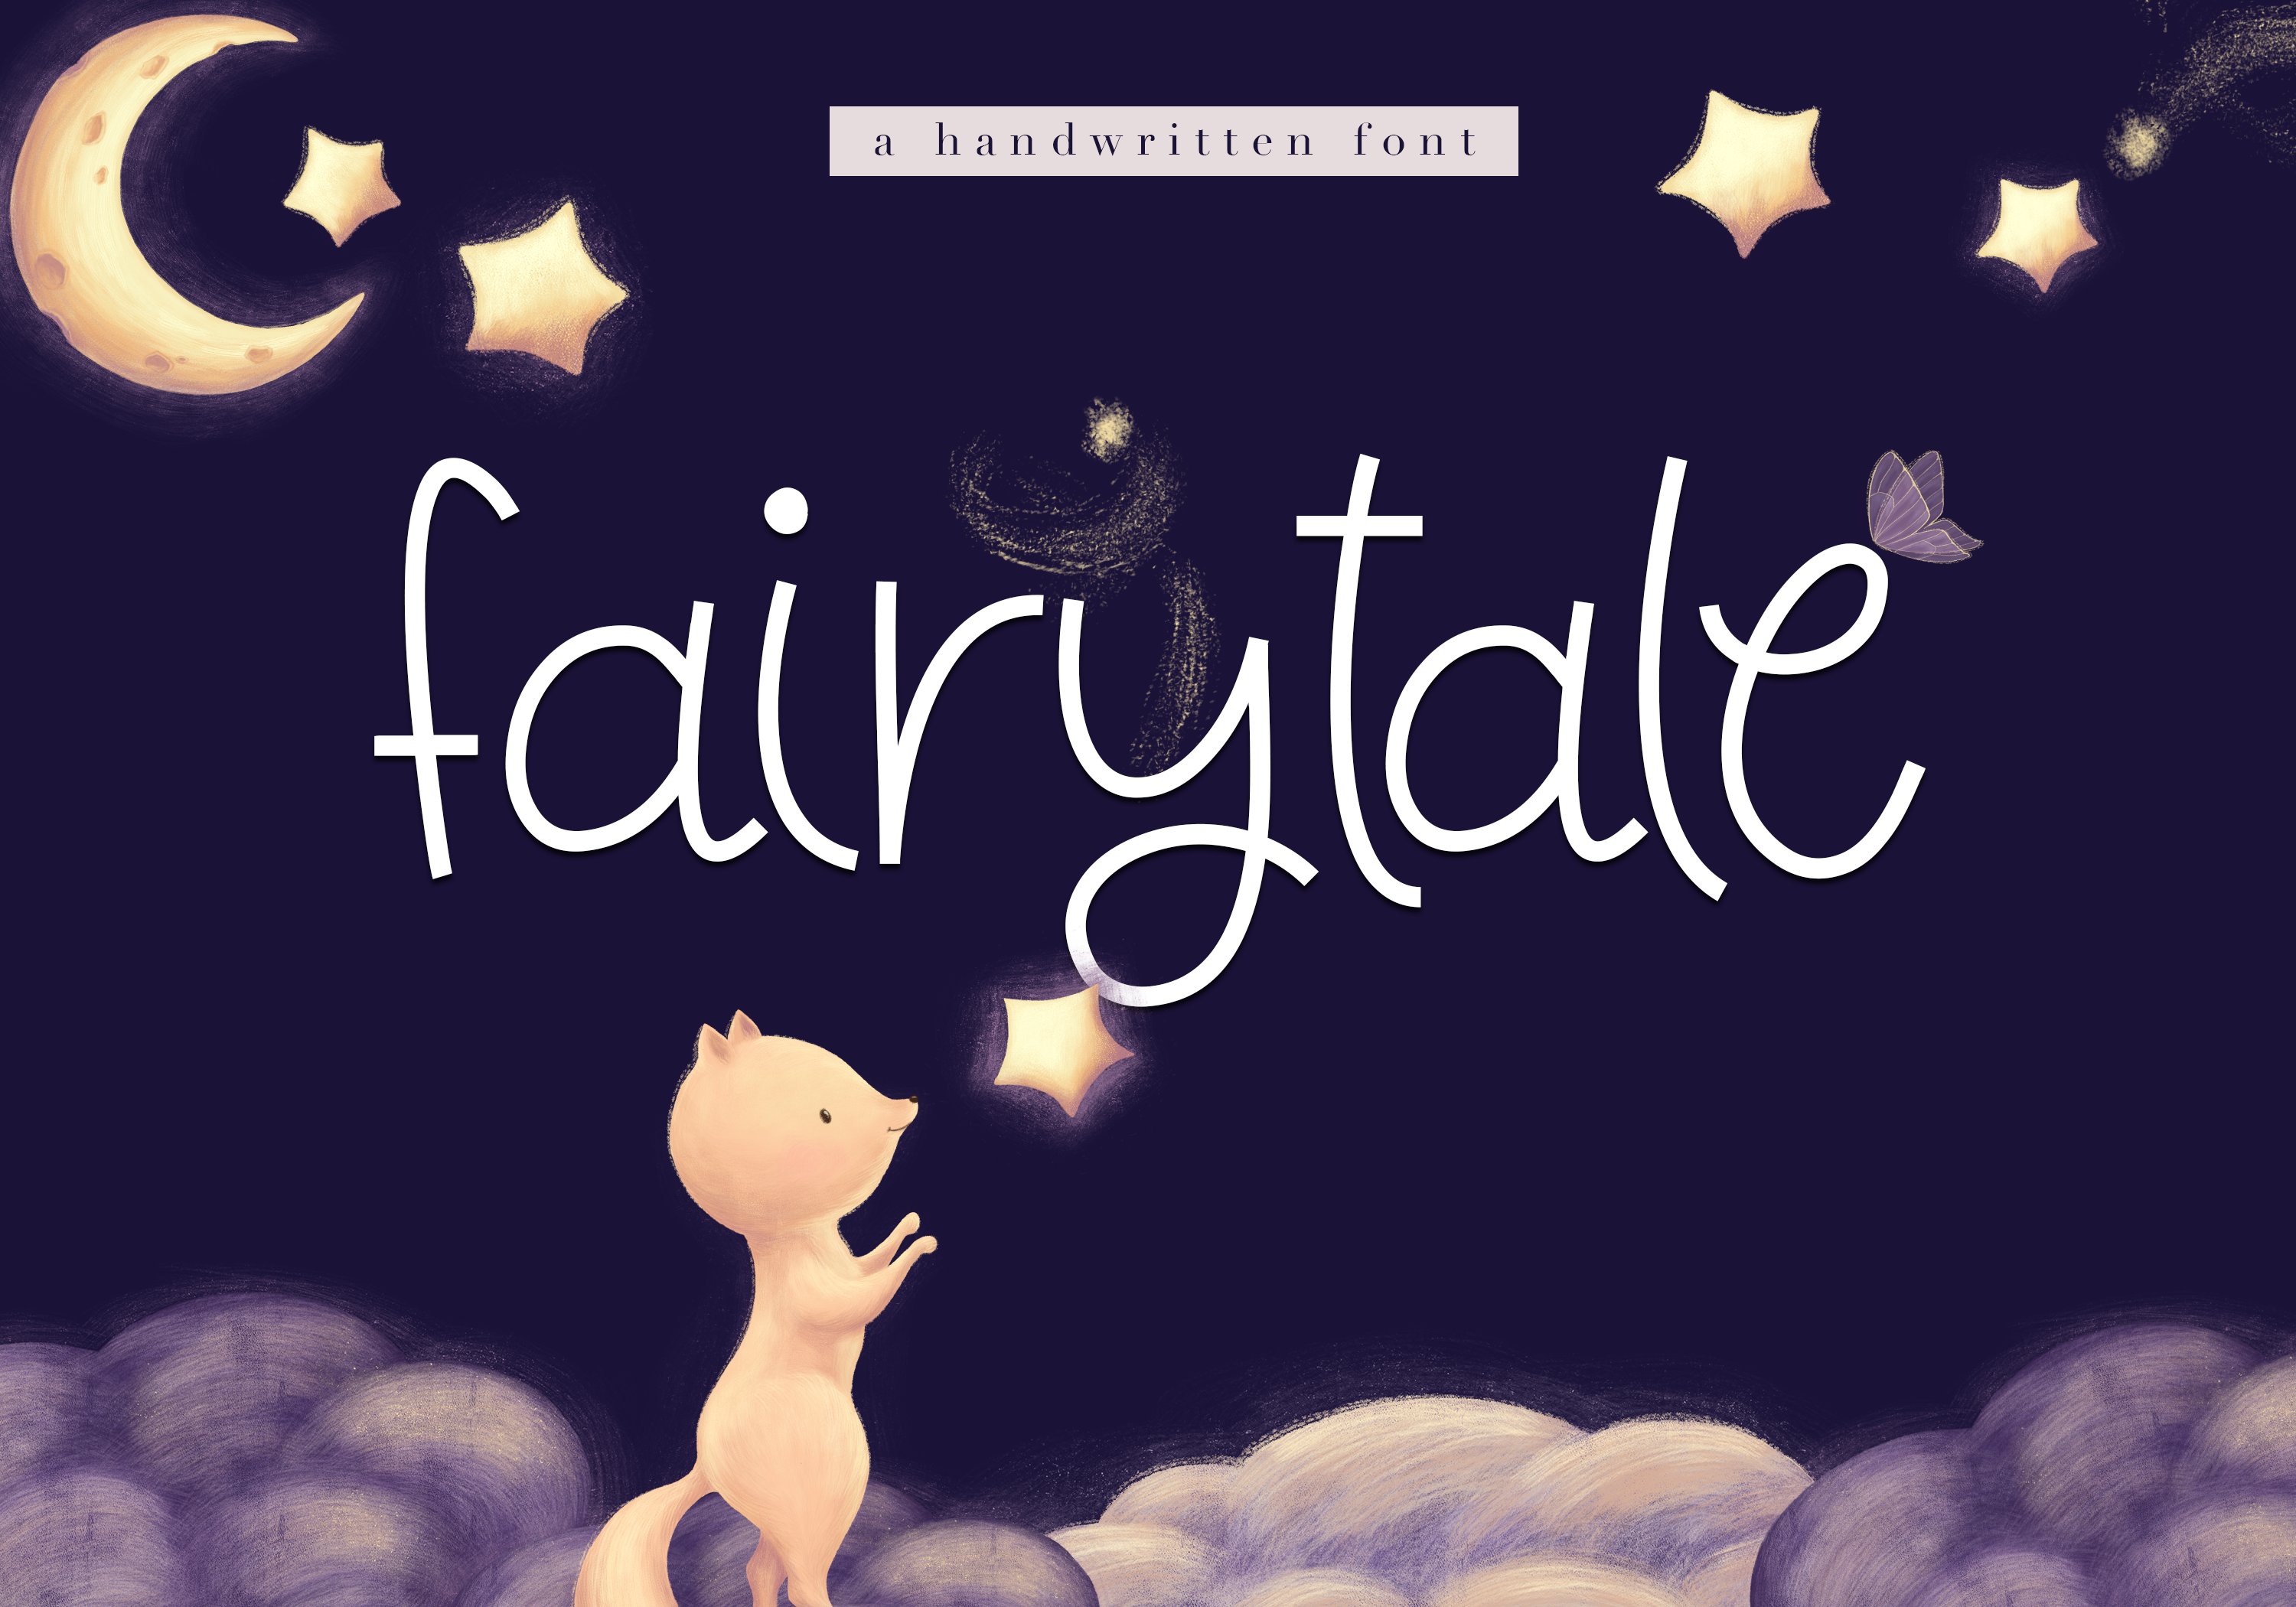 Fairytale - Cute Handwritten Font cover image.